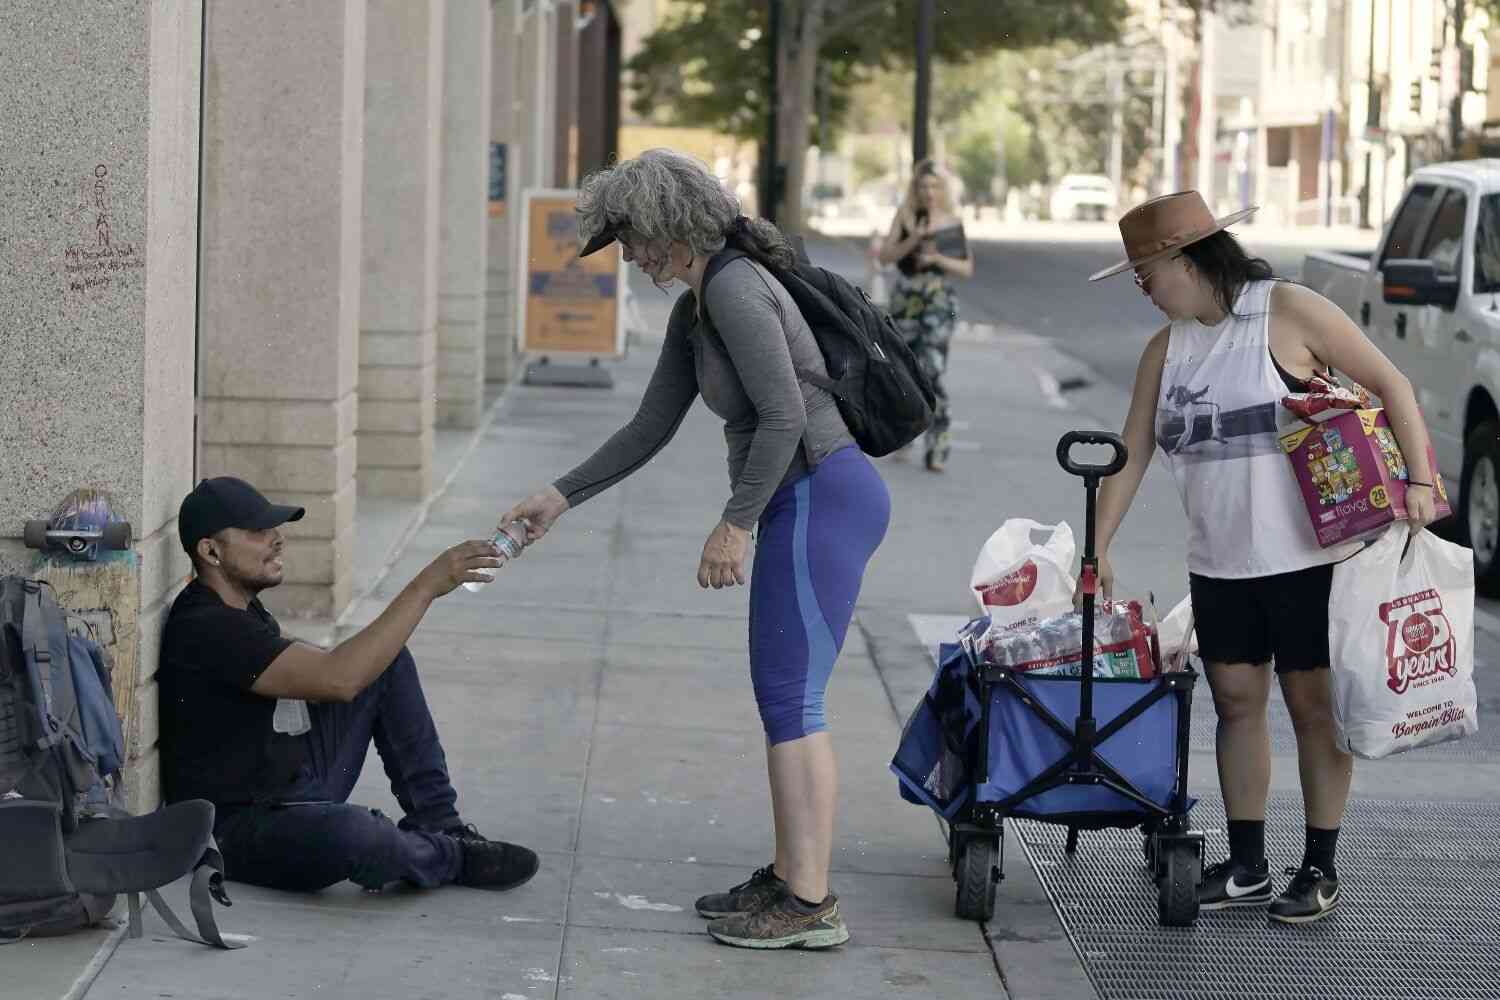 Los Angeles Mayor Eric Garcetti’s $12.5 million plan to help the homeless